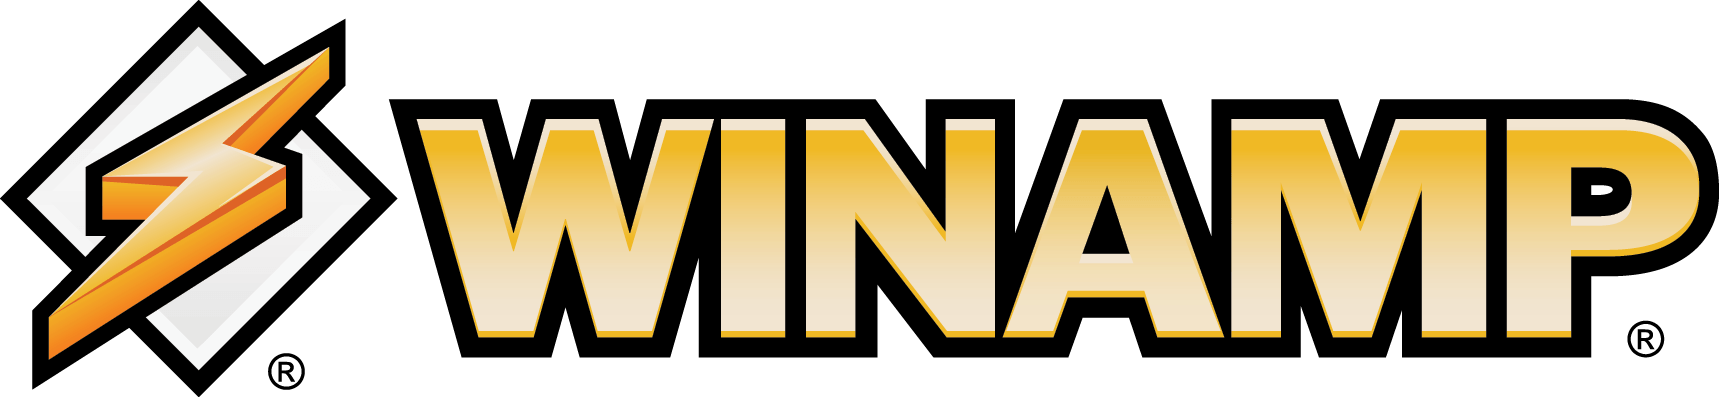 Winamp Logo - Winamp Logo. Vincent's james pierce senior and i am a rapper